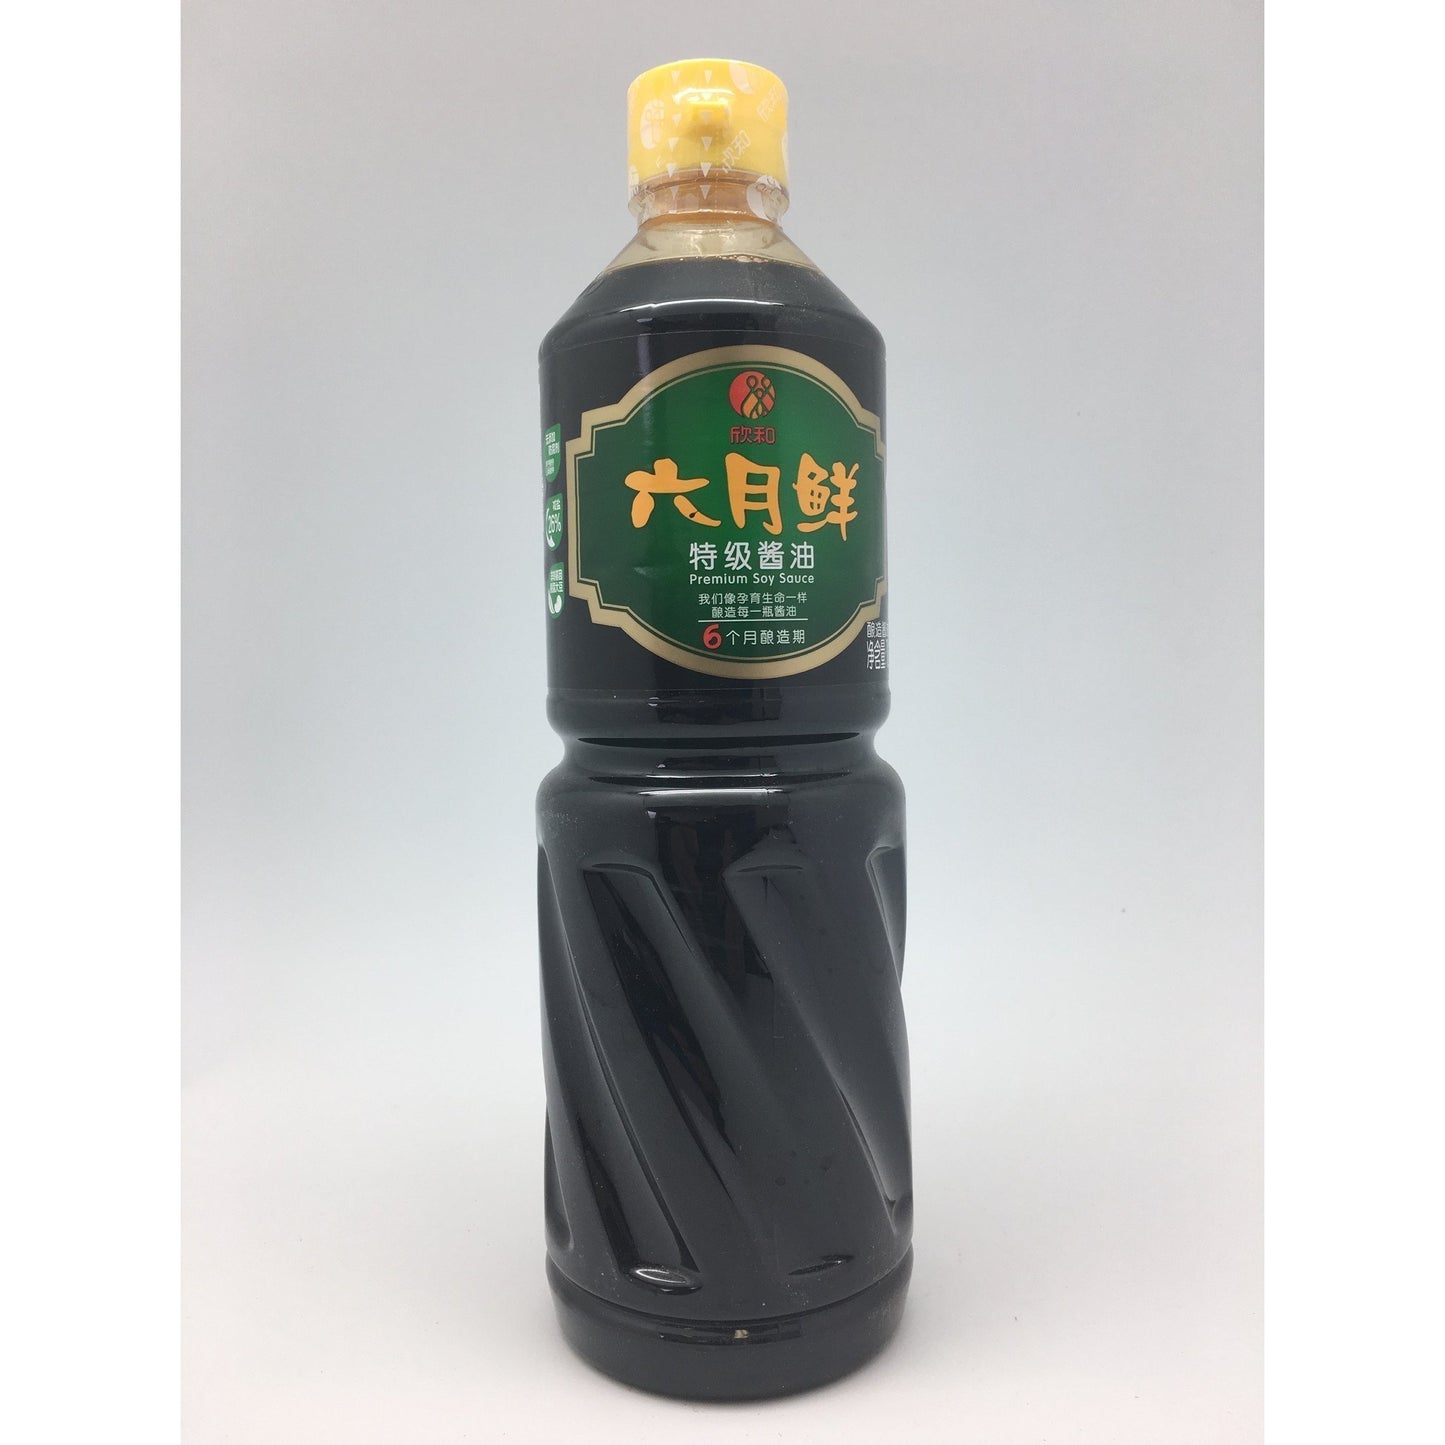 S073Y Liu Yue Xian Brand - Premium Soy Sauce 1000ml -  12 bot / 1ctn - New Eastland Pty Ltd - Asian food wholesalers